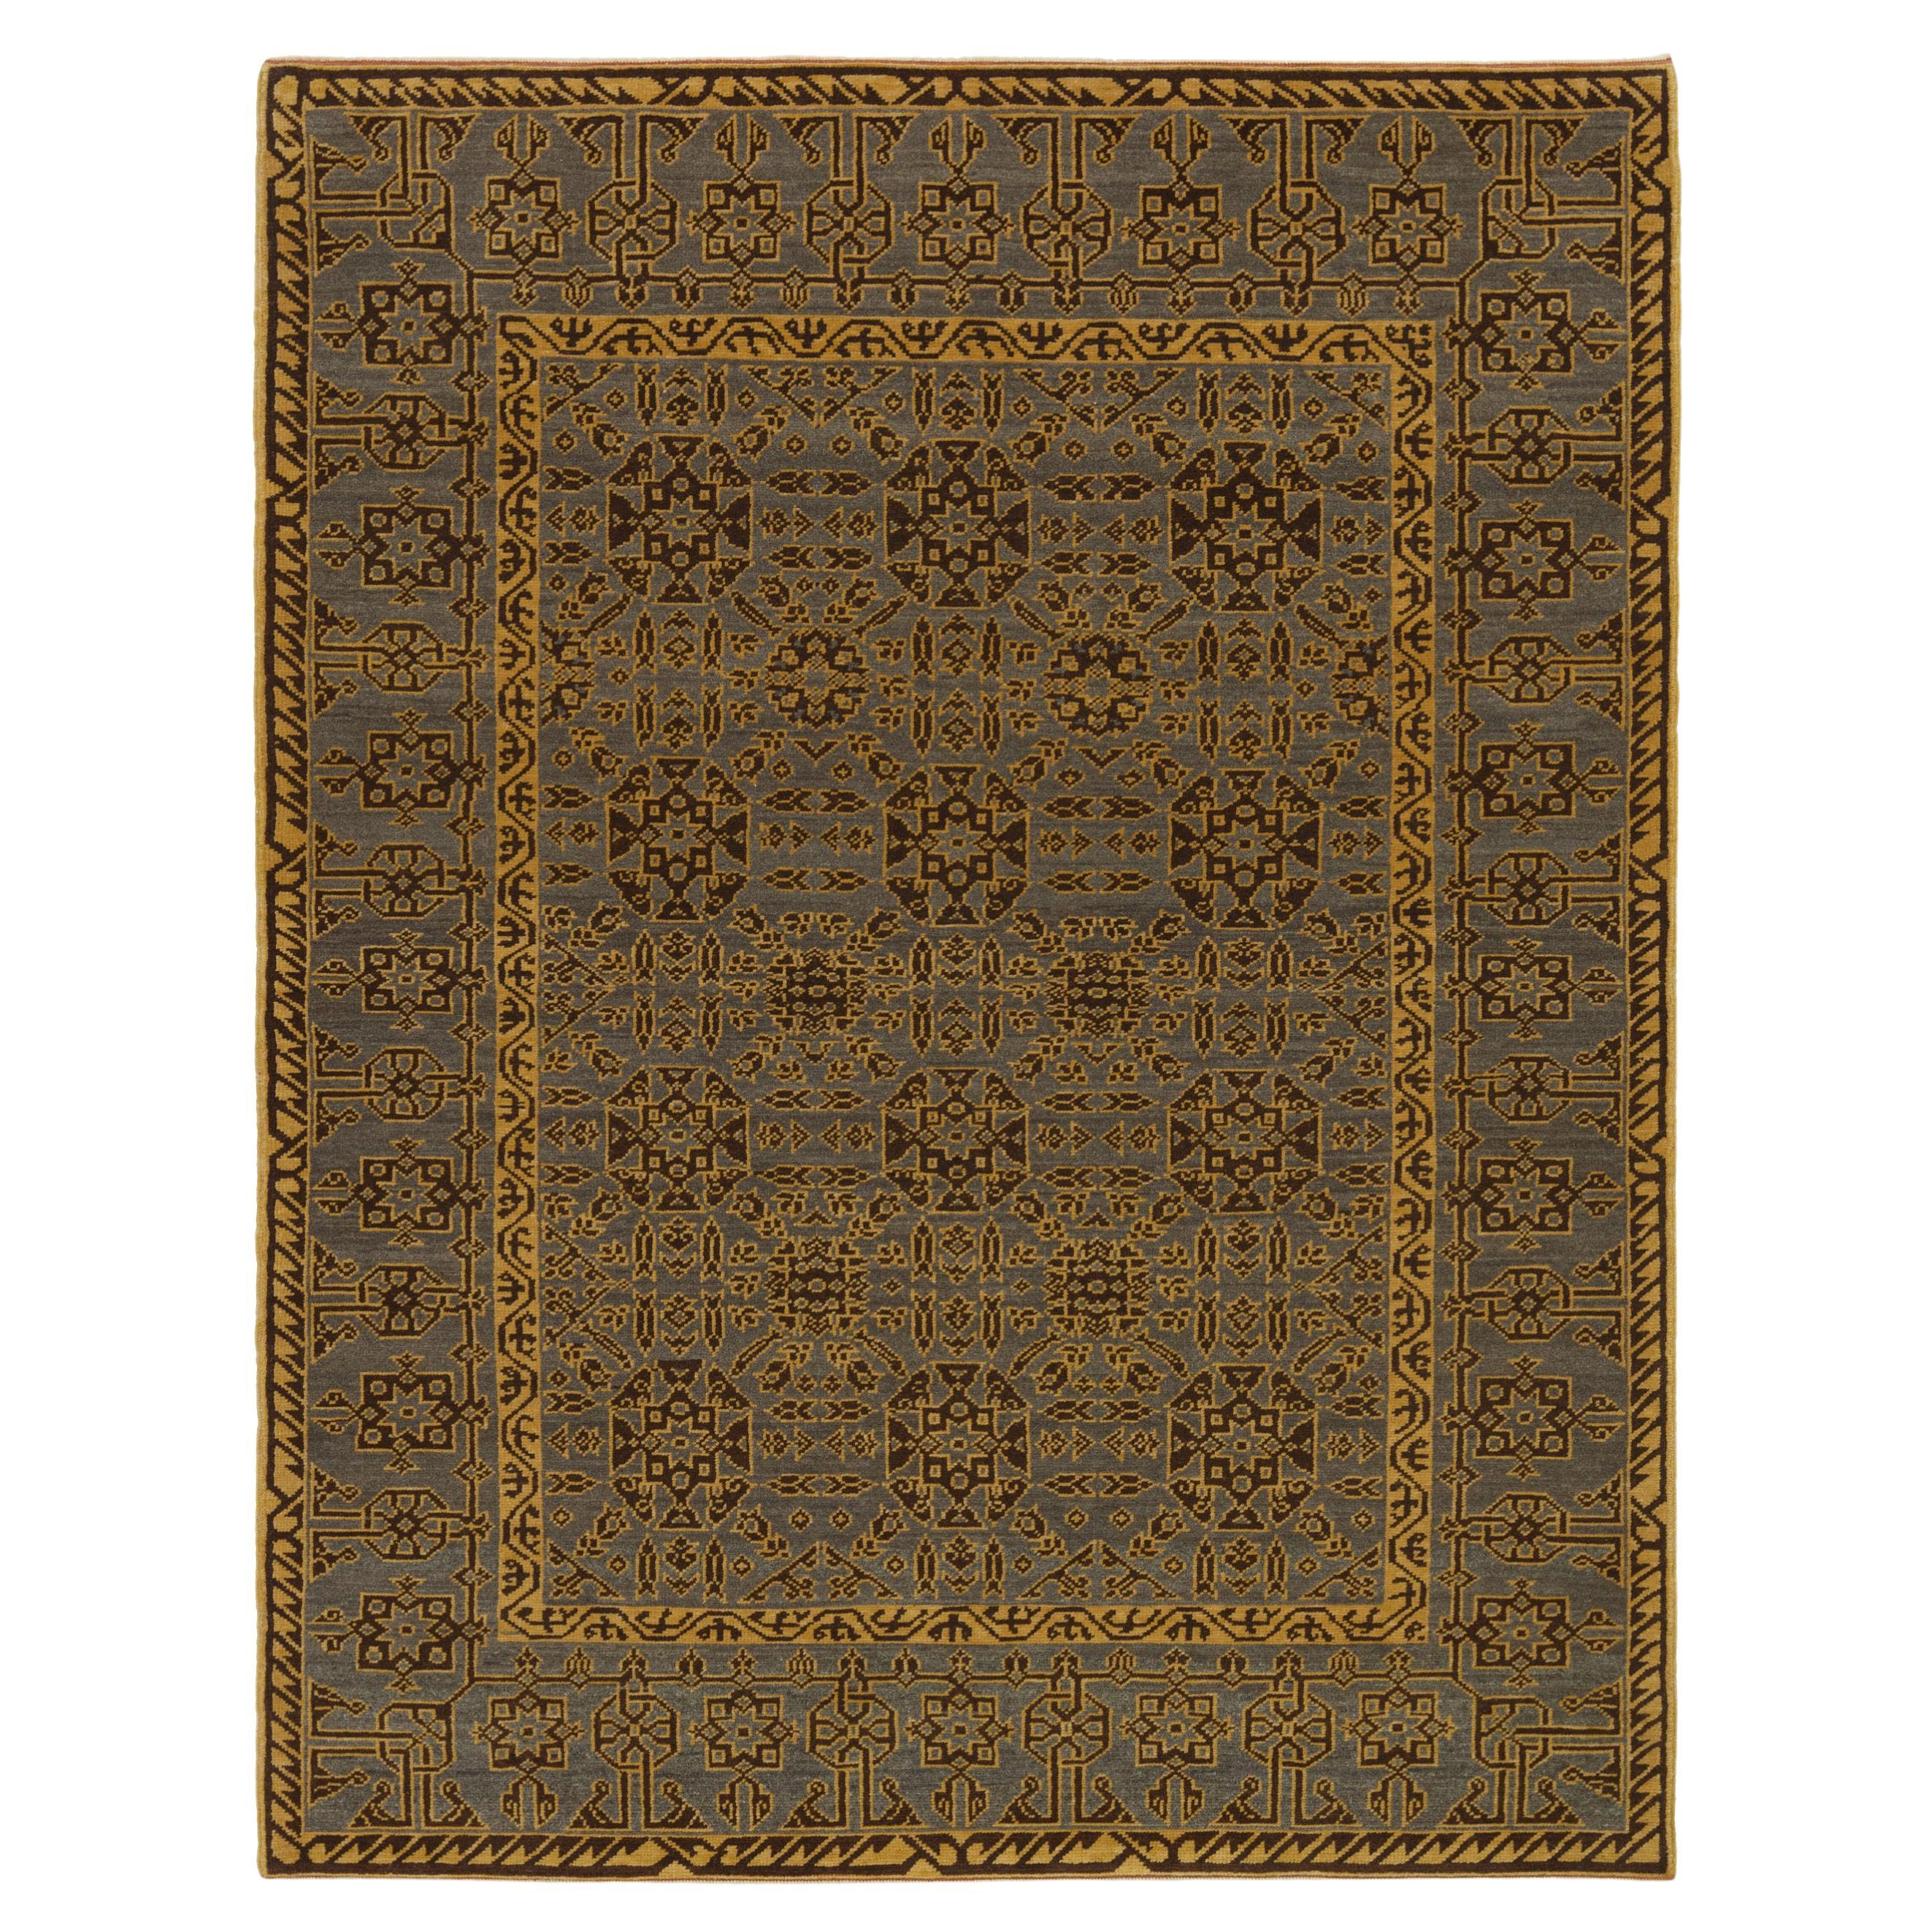 Ararat Rugs The Divrigi Ulu Mosque Carpet Anatolian Revival Rug, Natural Dyed